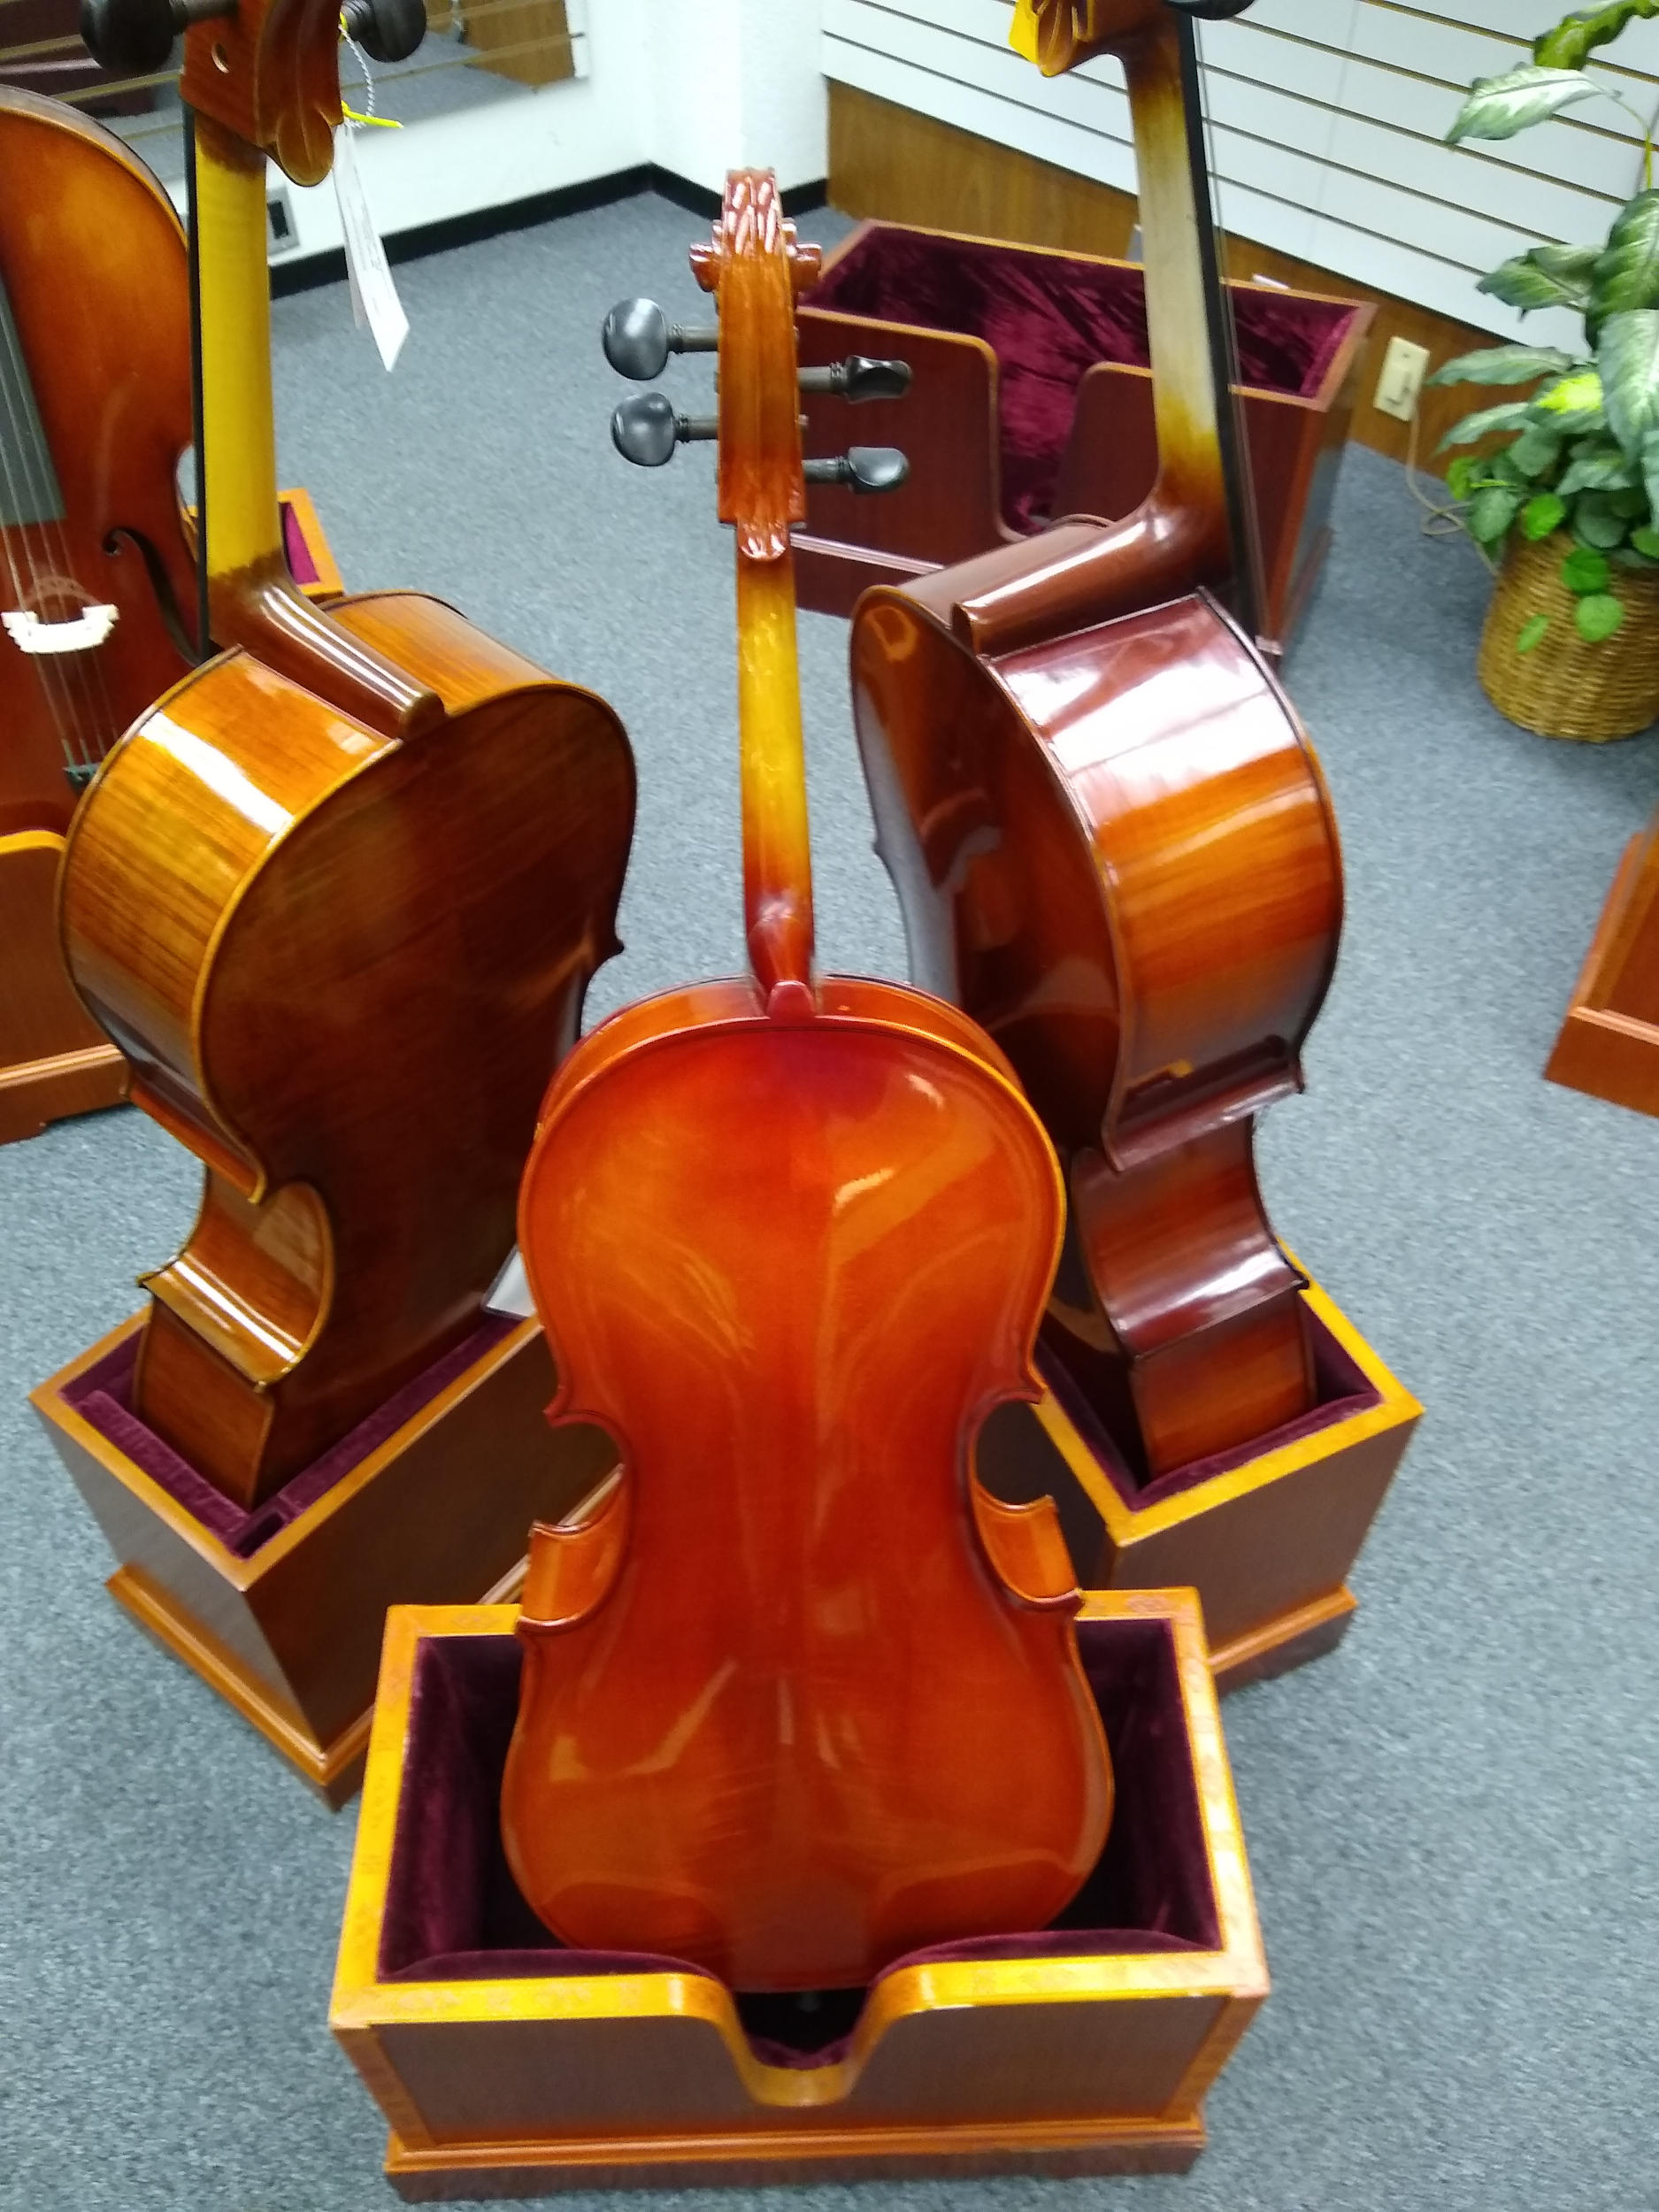 Vienna Strings 1/2 Cello